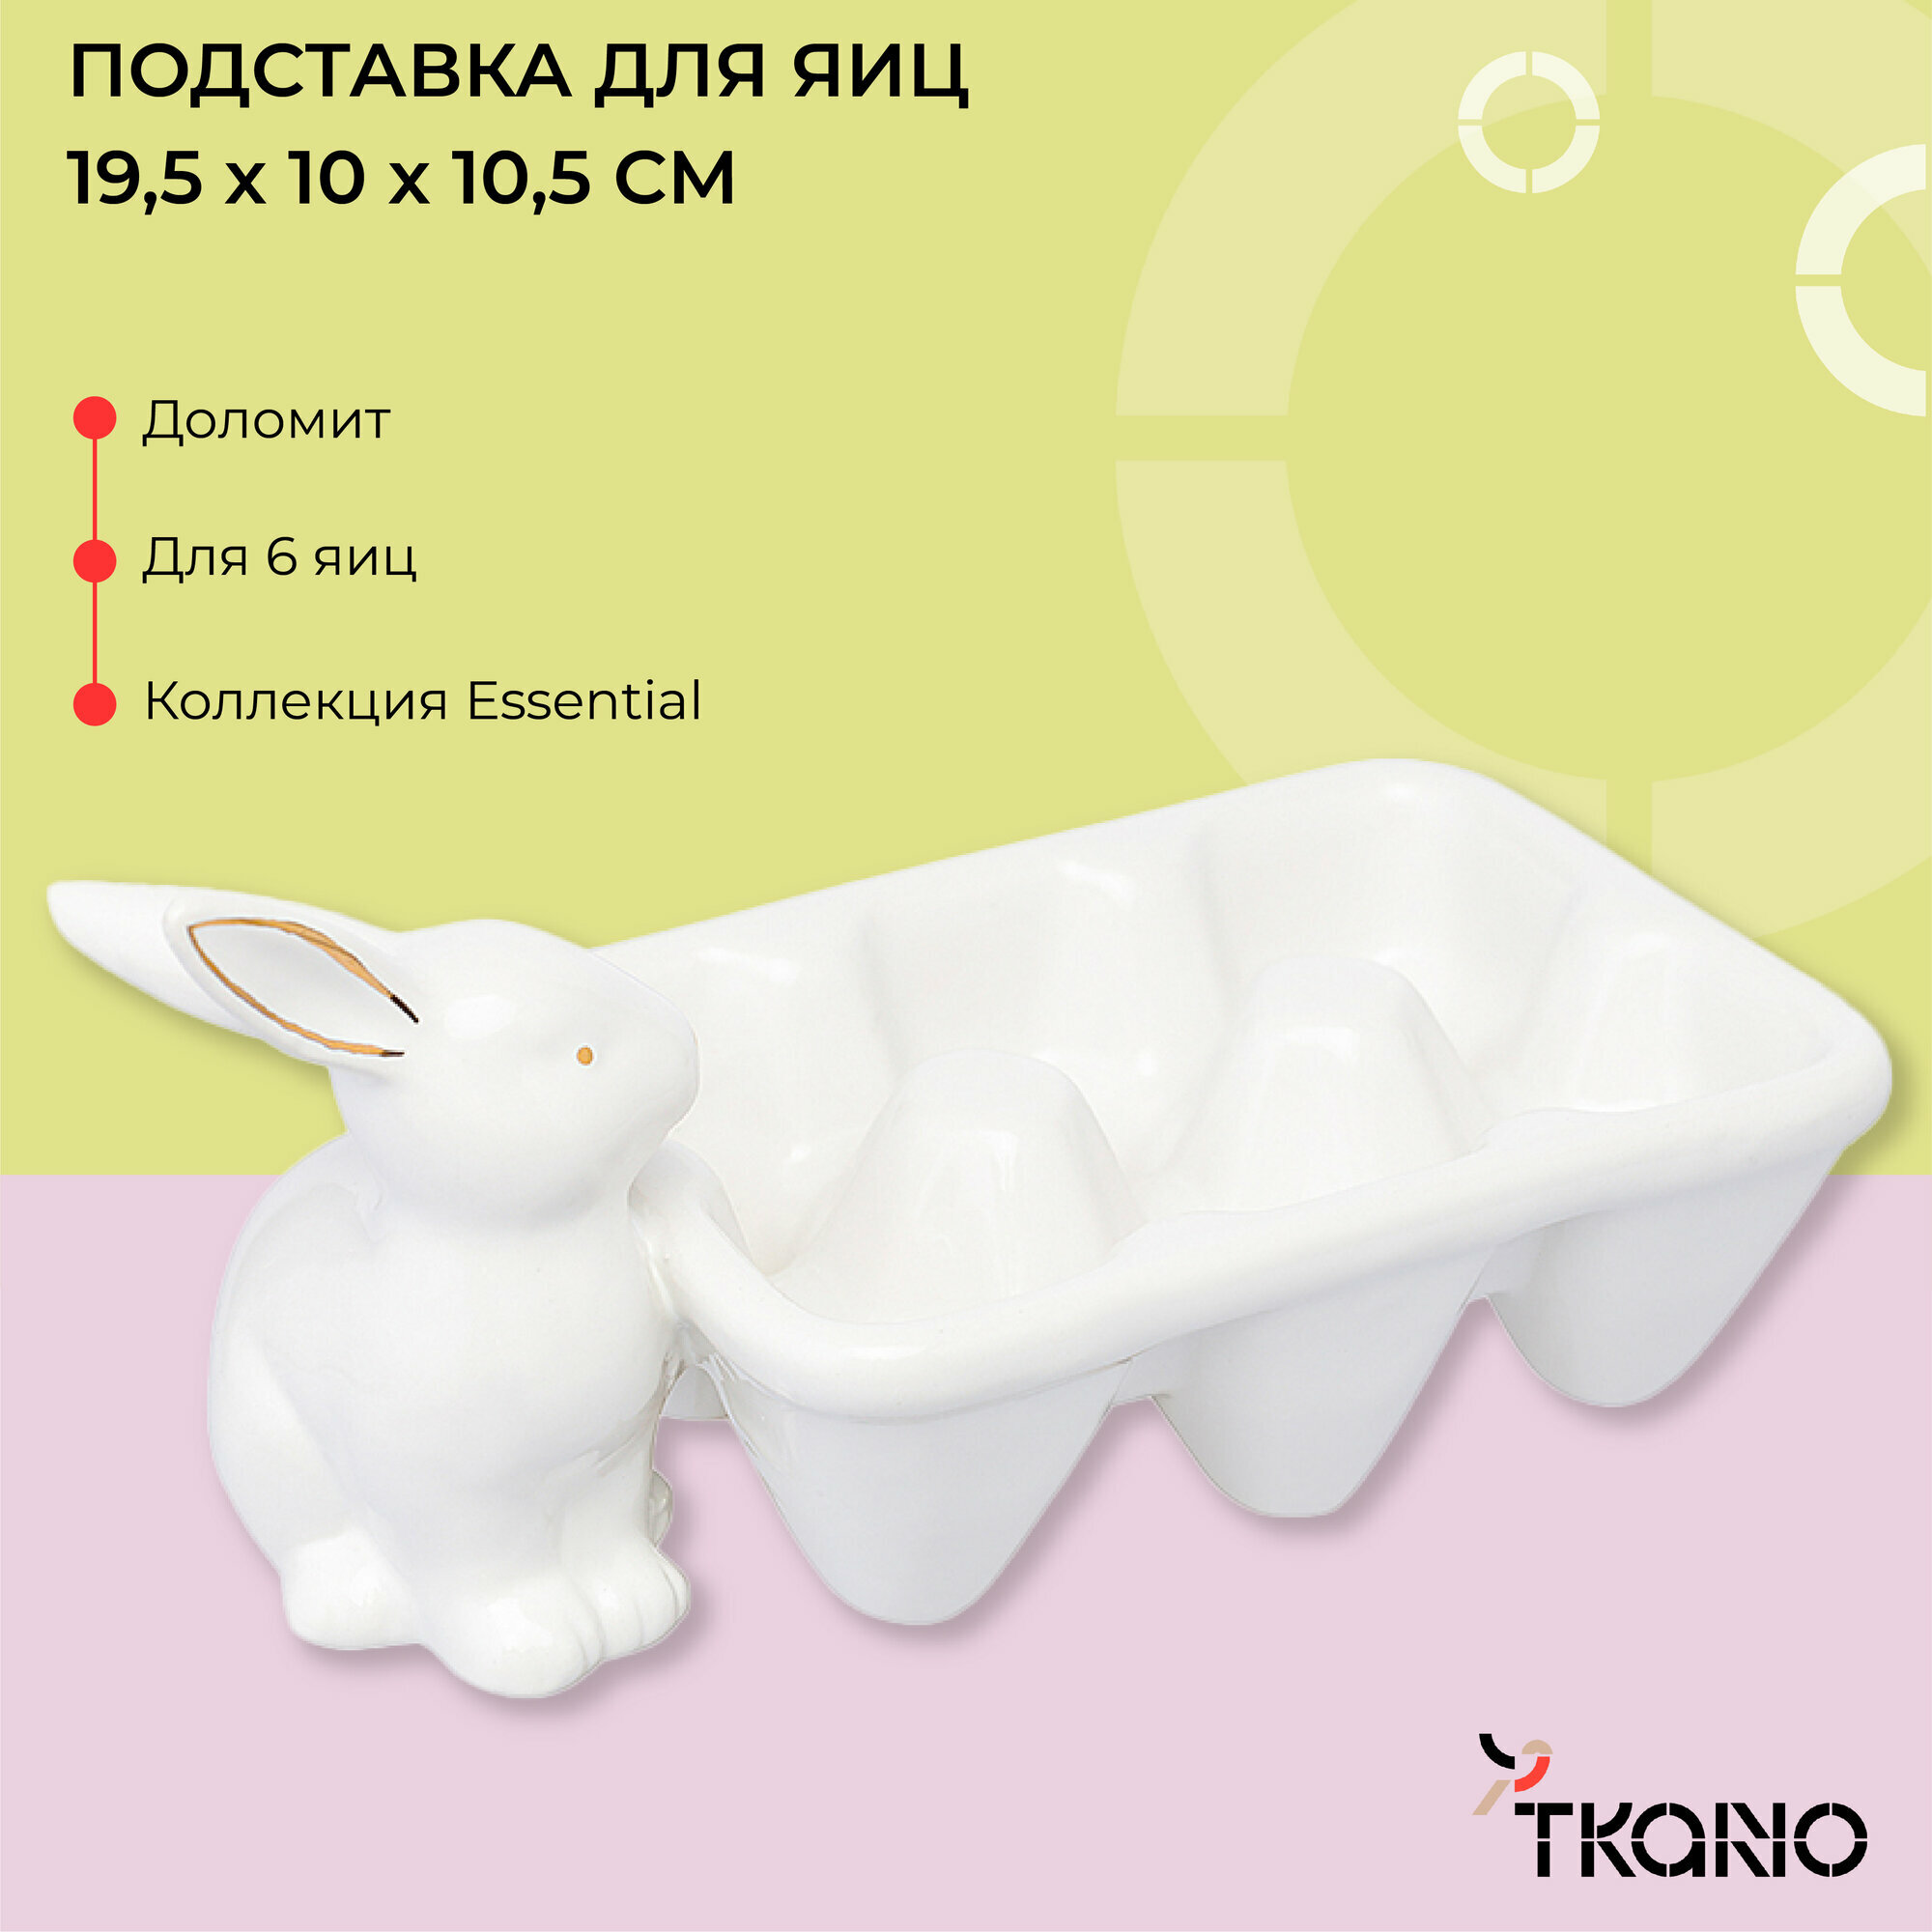 Подставка для яиц Easter Bunny пасхальная из доломита с зайцем 6 ячеек Essential 19,3х10x10,5 см Tkano TK24-TW_EGH0001